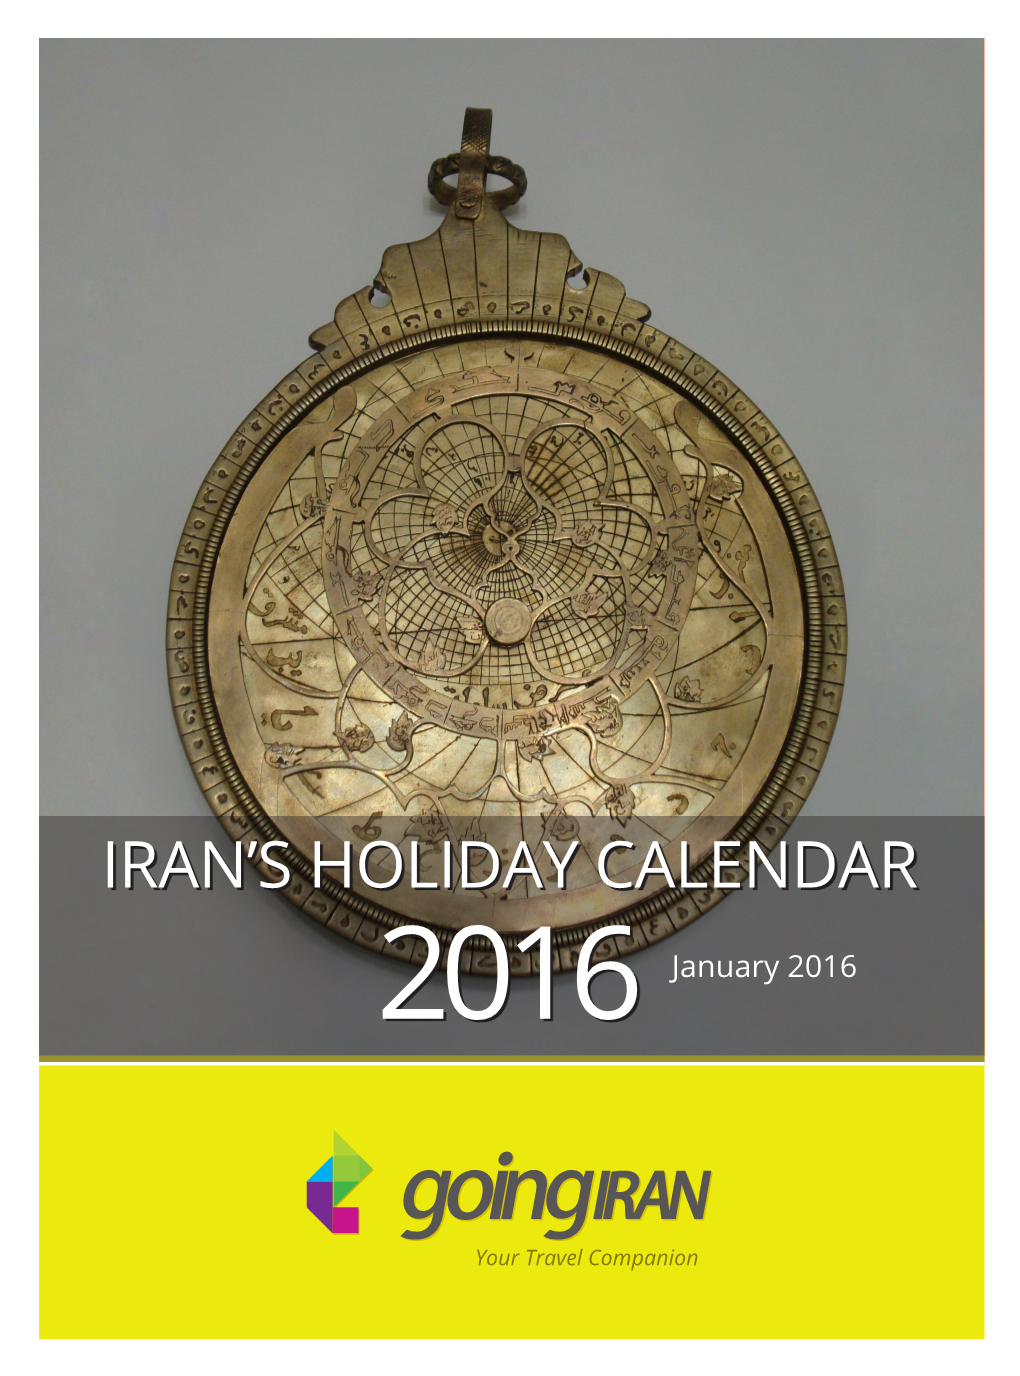 Iran's Holiday Calendar